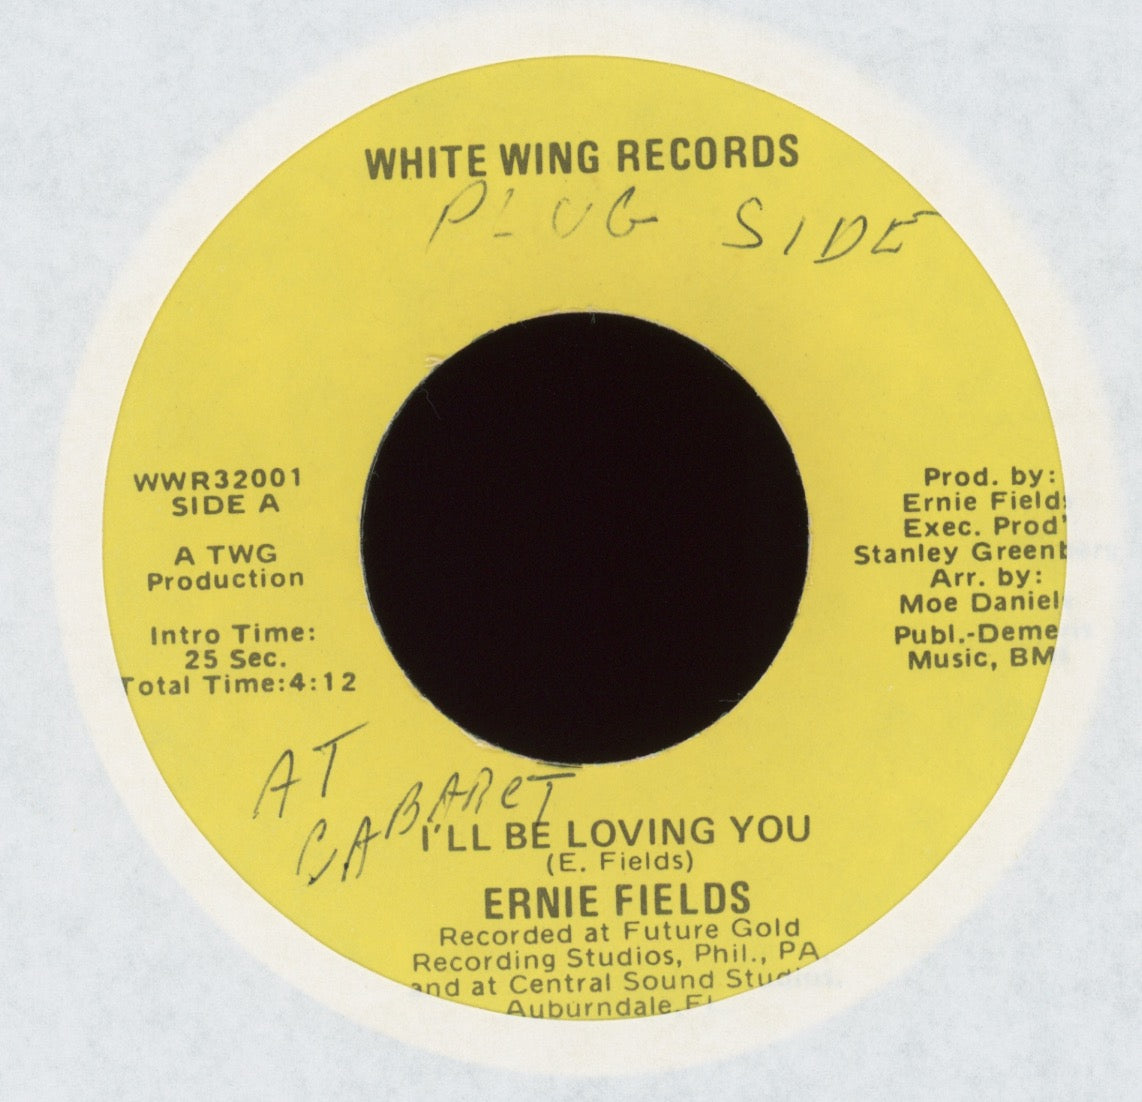 Ernie Fields - "I Heard You" Talking In Your Sleep on White Wing